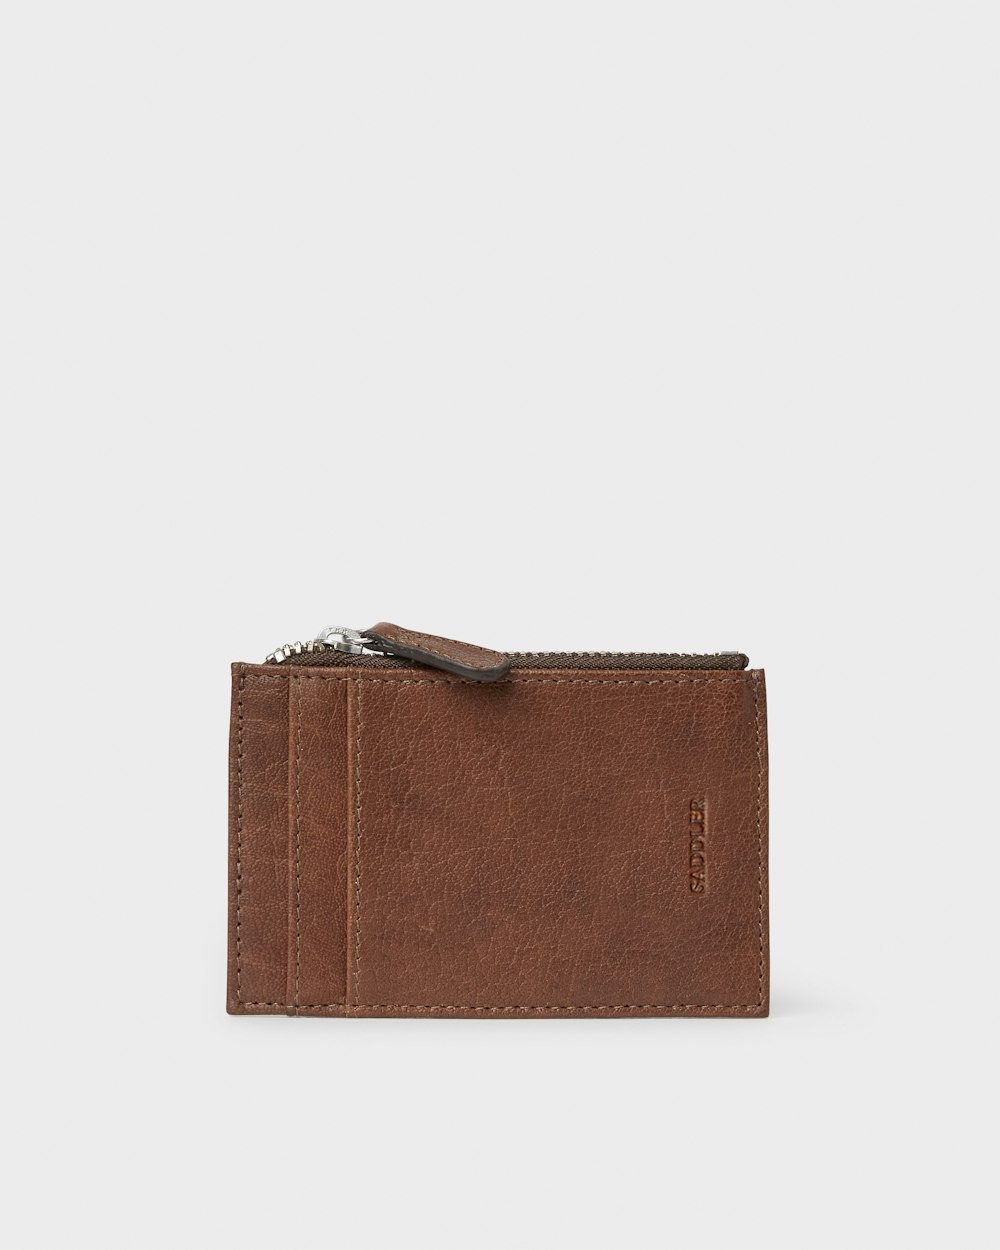 Black & Saddle Brown Leather Slim Wallet